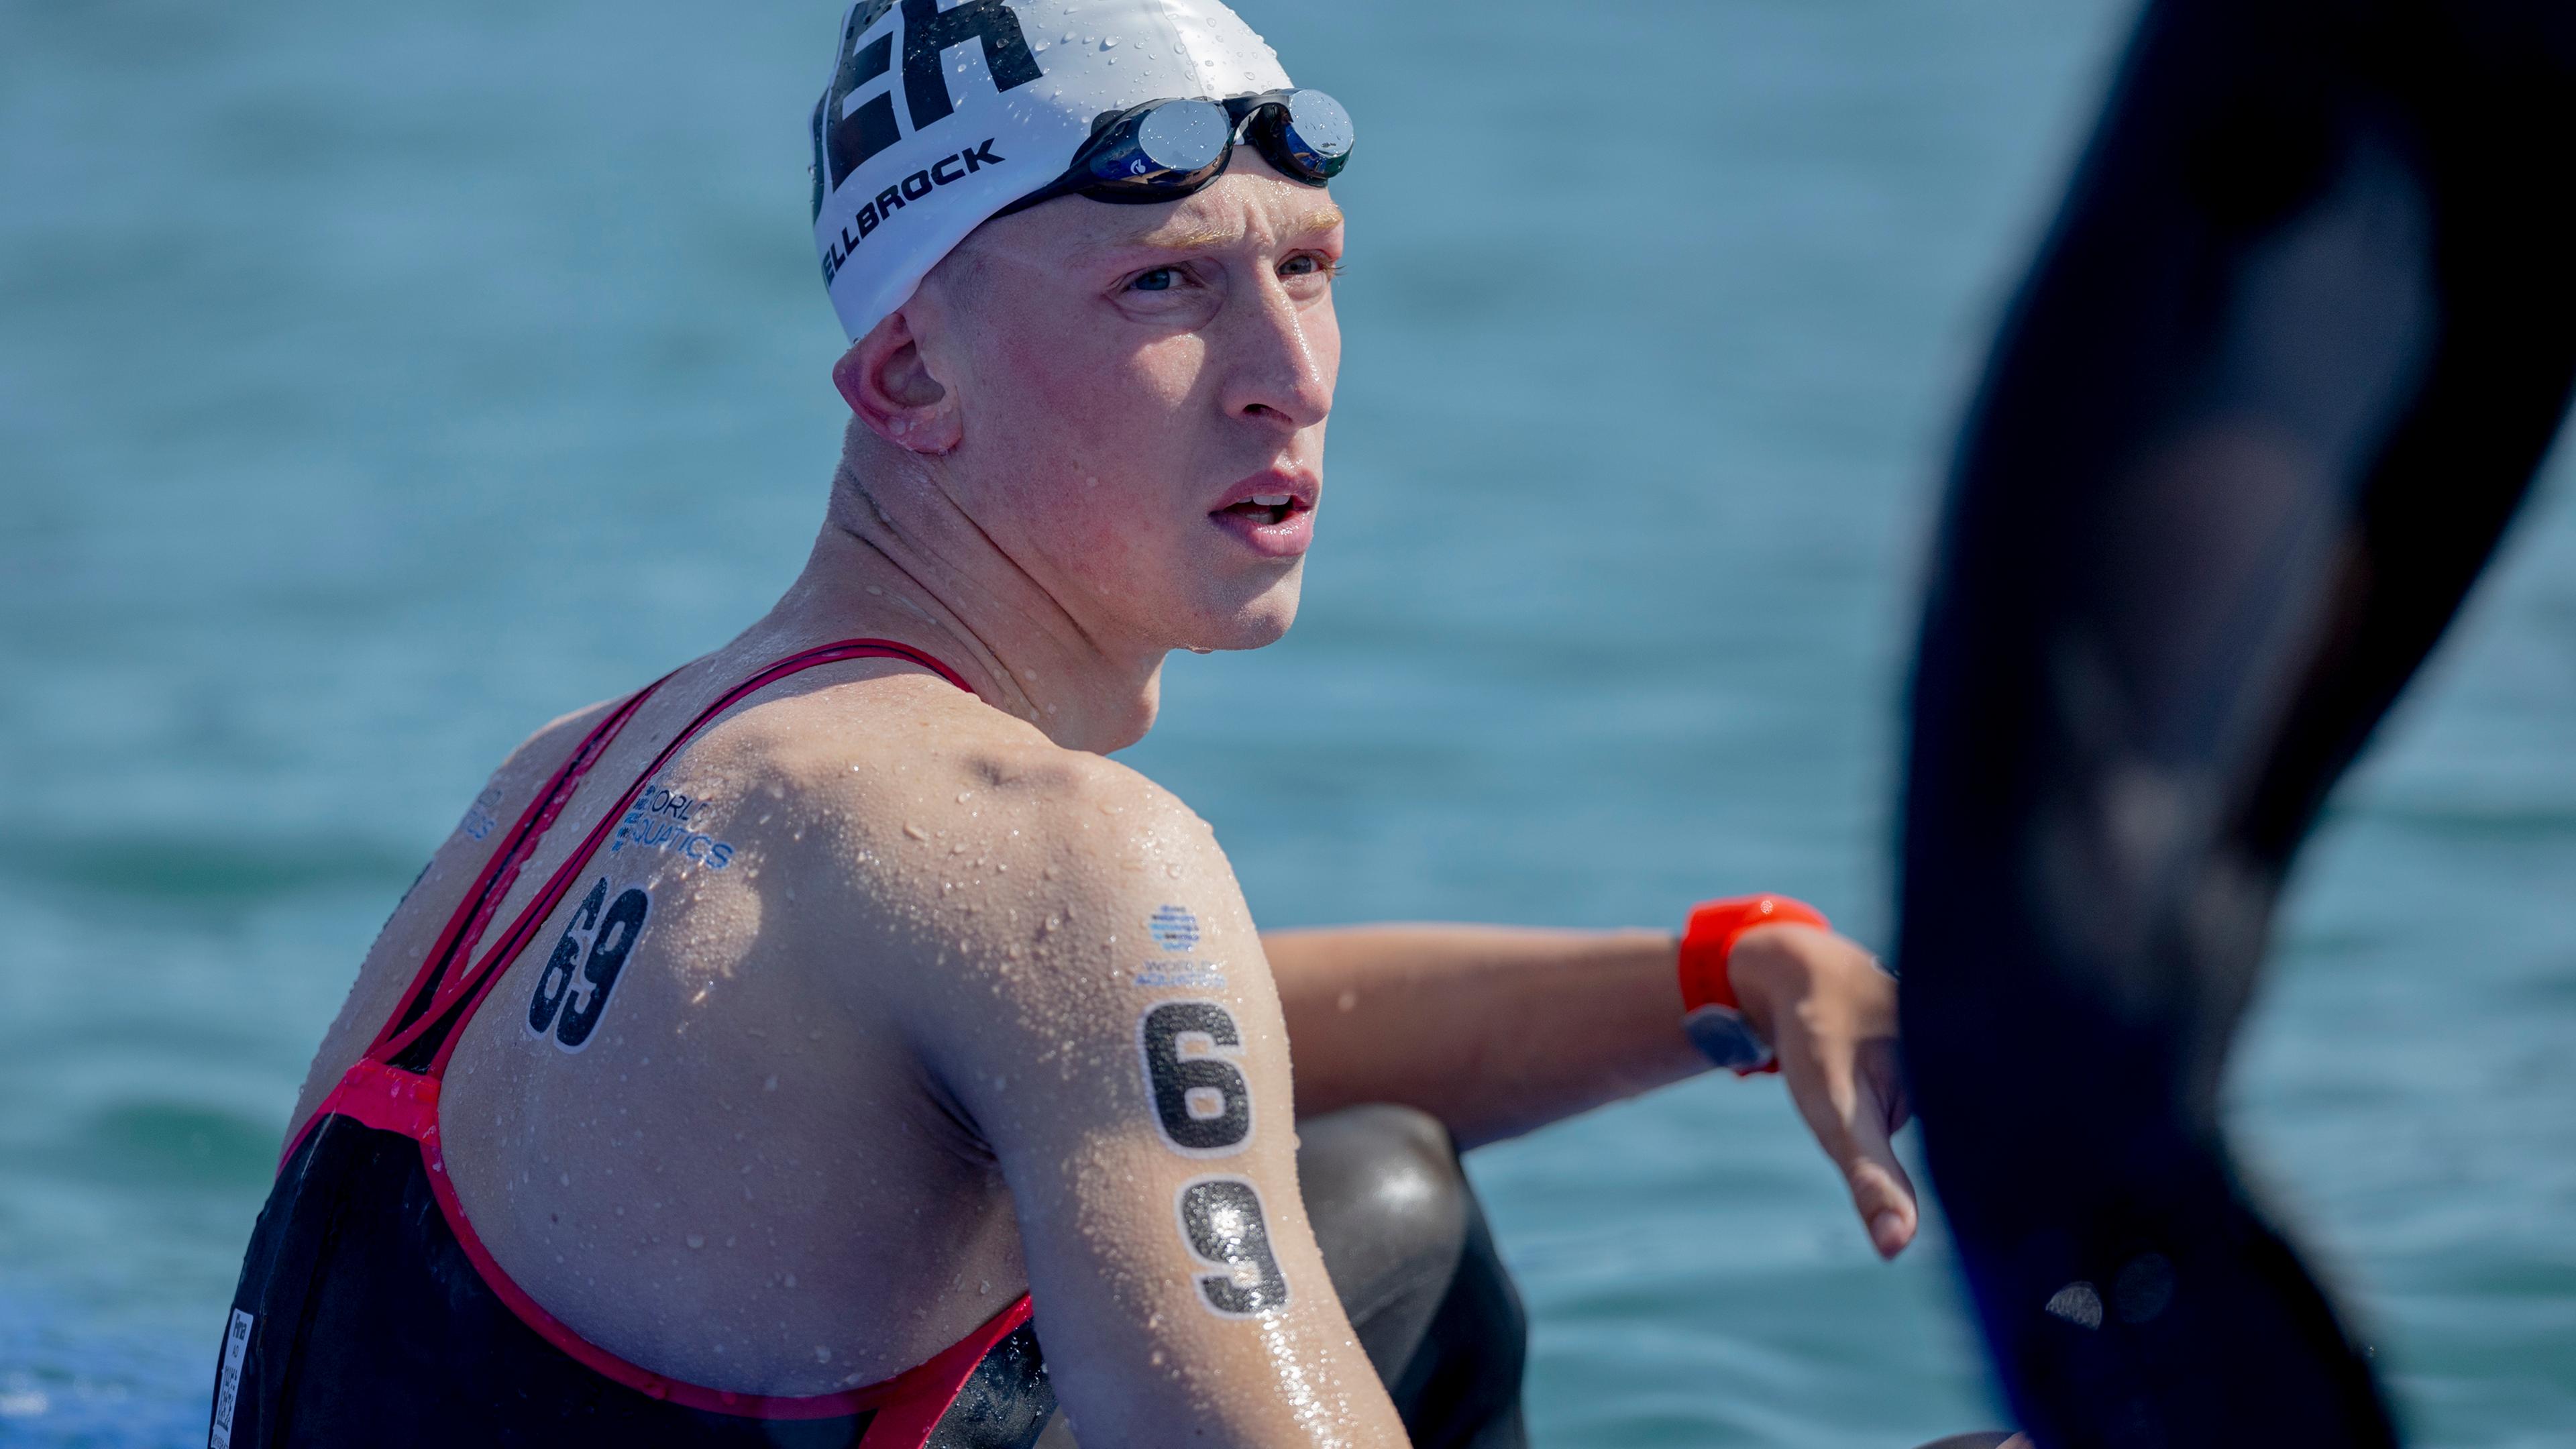 Katar, Doha: Schwimmen: Weltmeisterschaft, Freiwasser - 10 km, Männer: Florian Wellbrock aus Deutschland sitzt nach dem Wettkampf enttäuscht am Wasser.